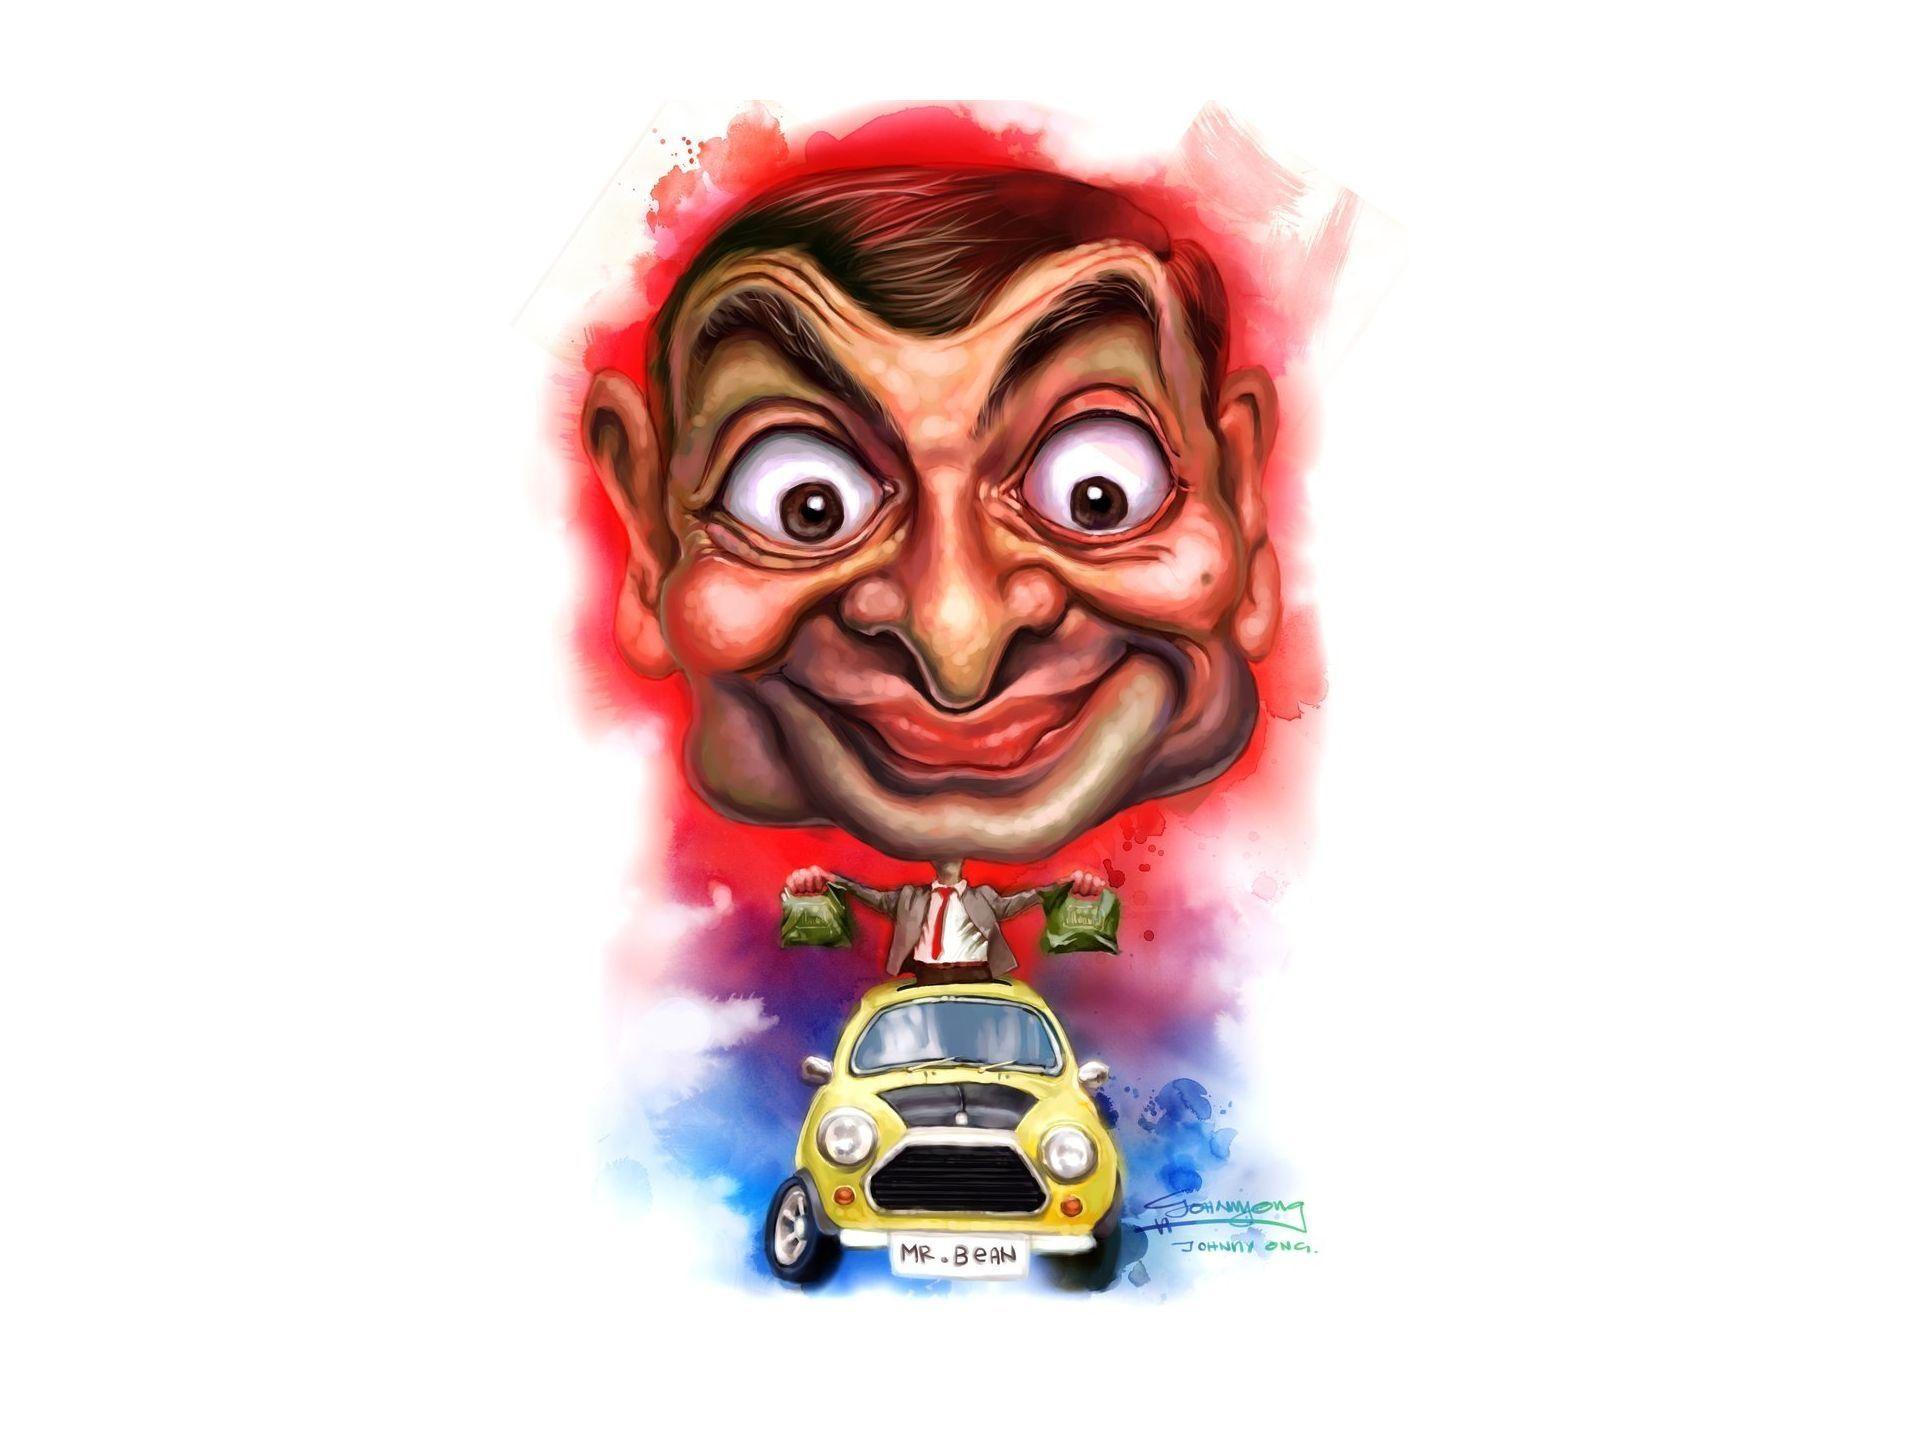 Mr. Bean Full HD Wallpaper and Backgroundx1440